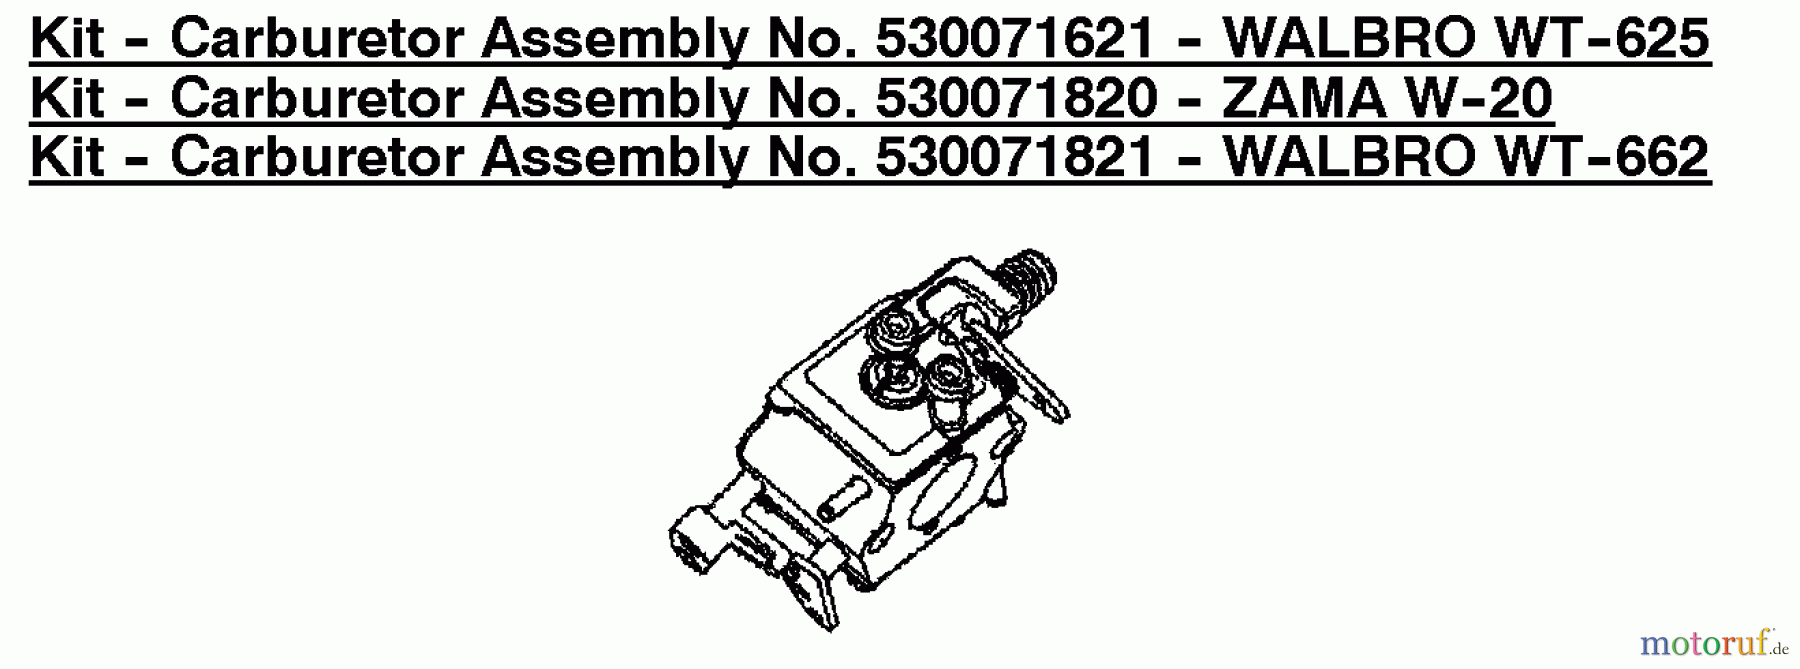  Poulan / Weed Eater Motorsägen PP220 (Type 1) - Poulan Pro Chainsaw Kit - Carburetor Assembly